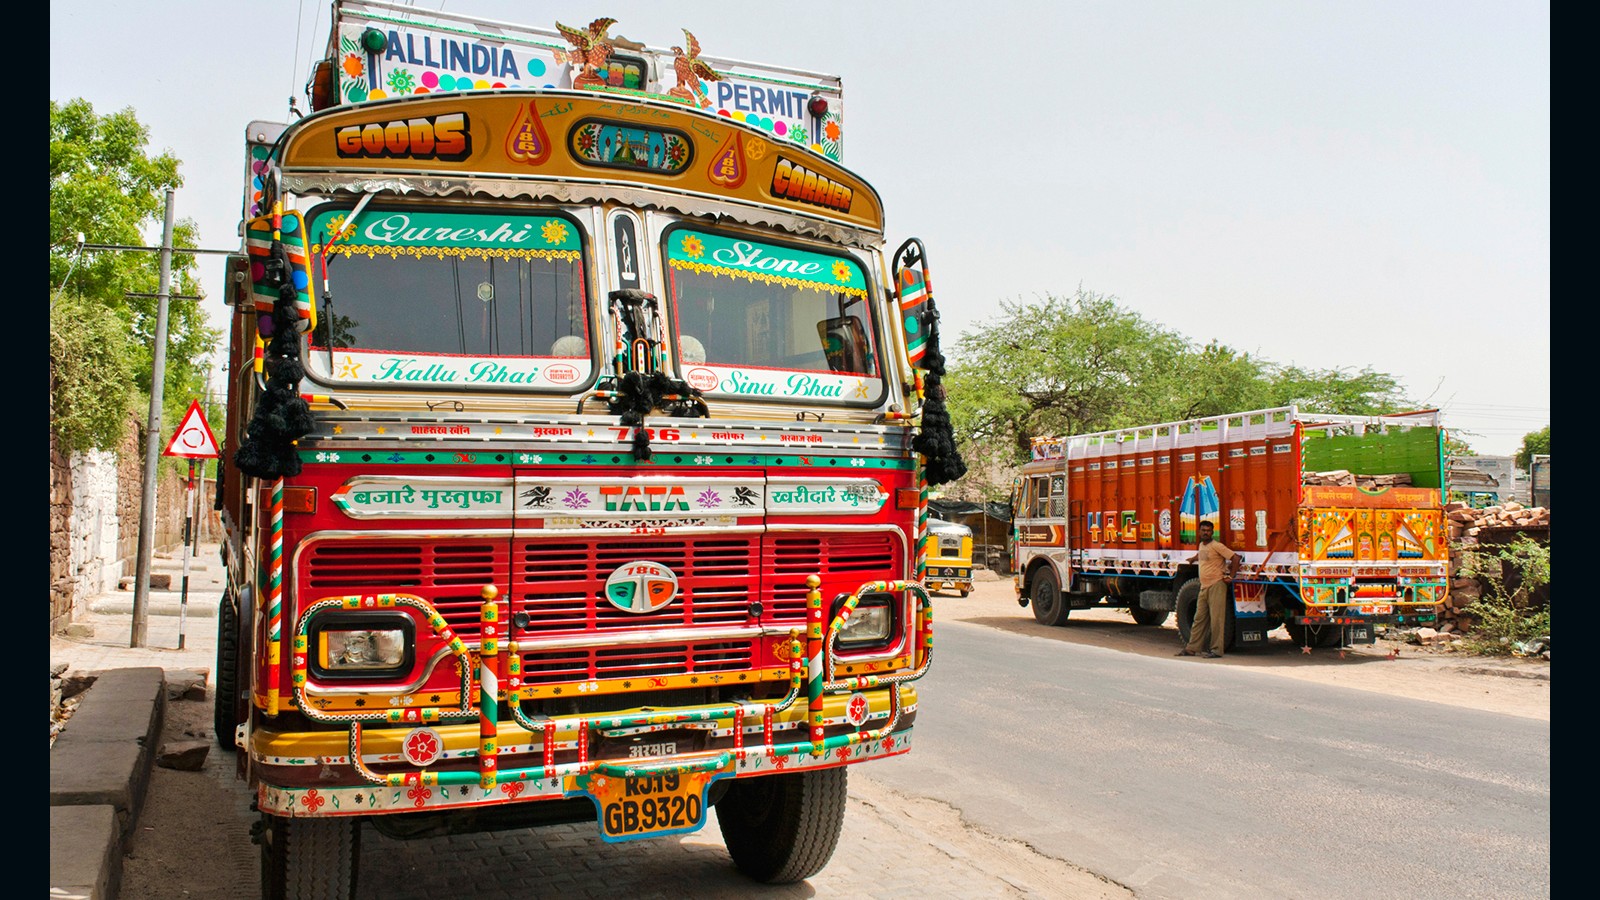 The Indian truck art tradition \/ Inside Indian truck art  CNN Travel